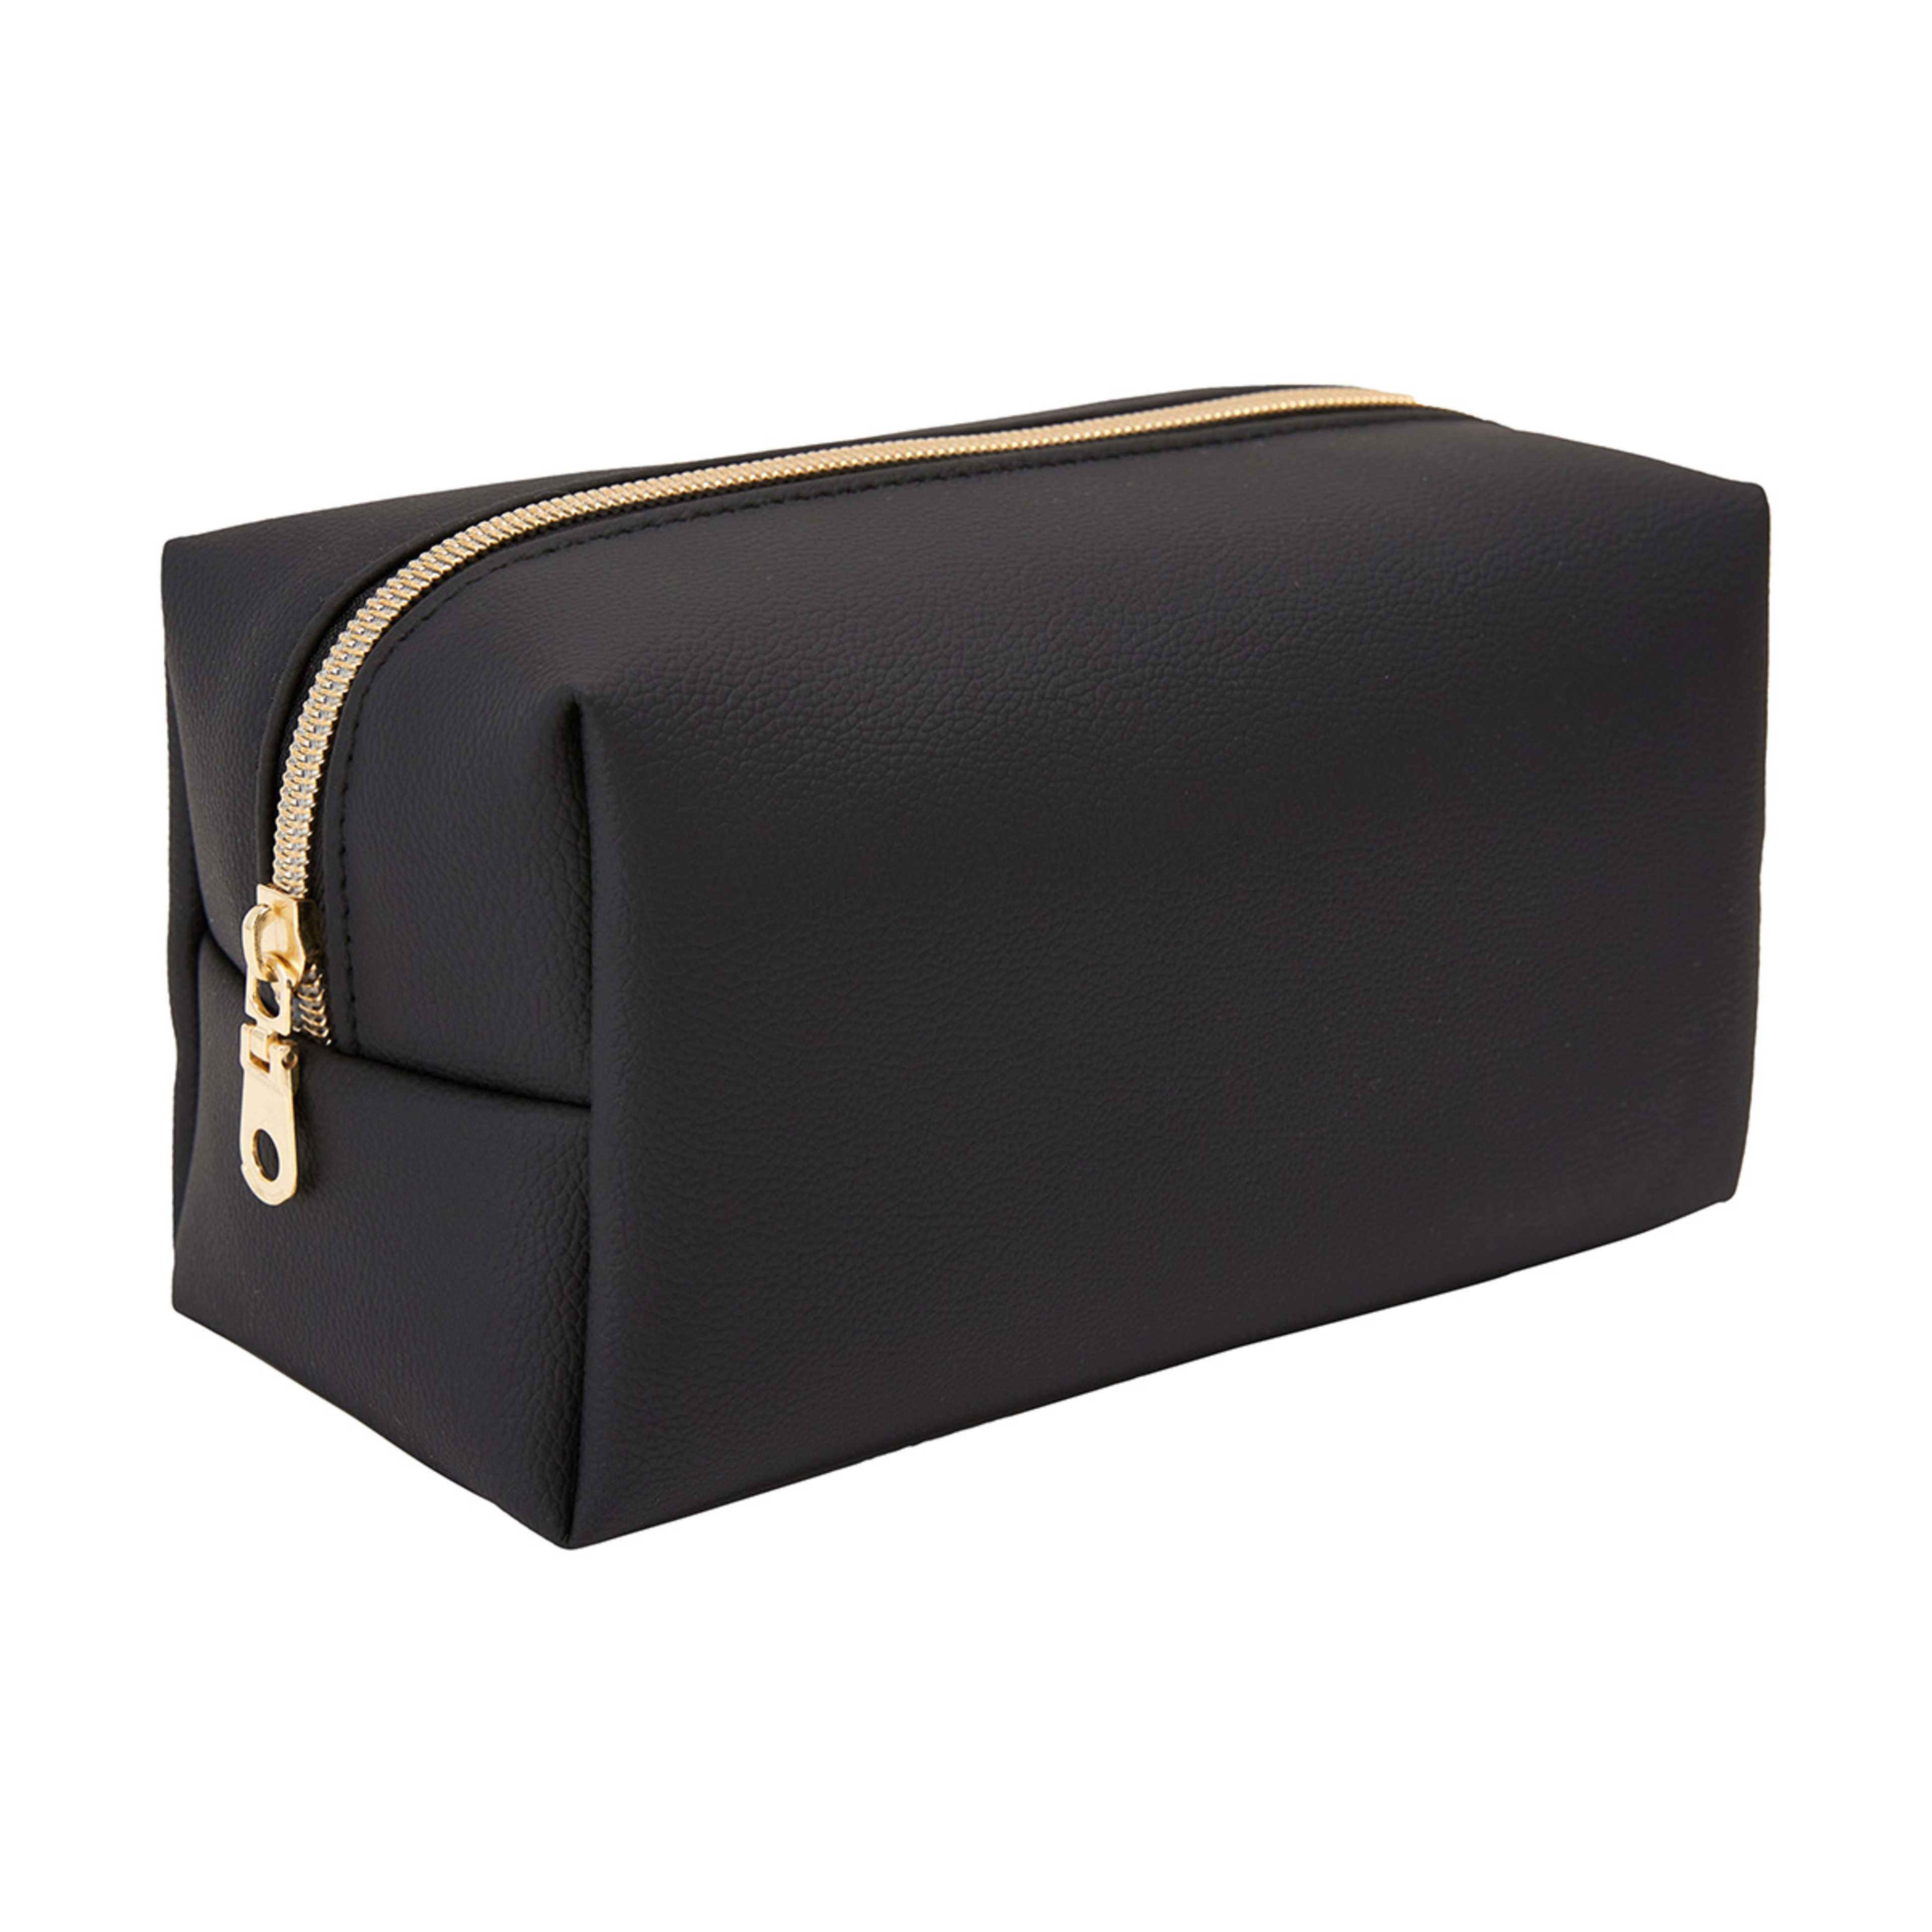 Box Cosmetic Bag - Black